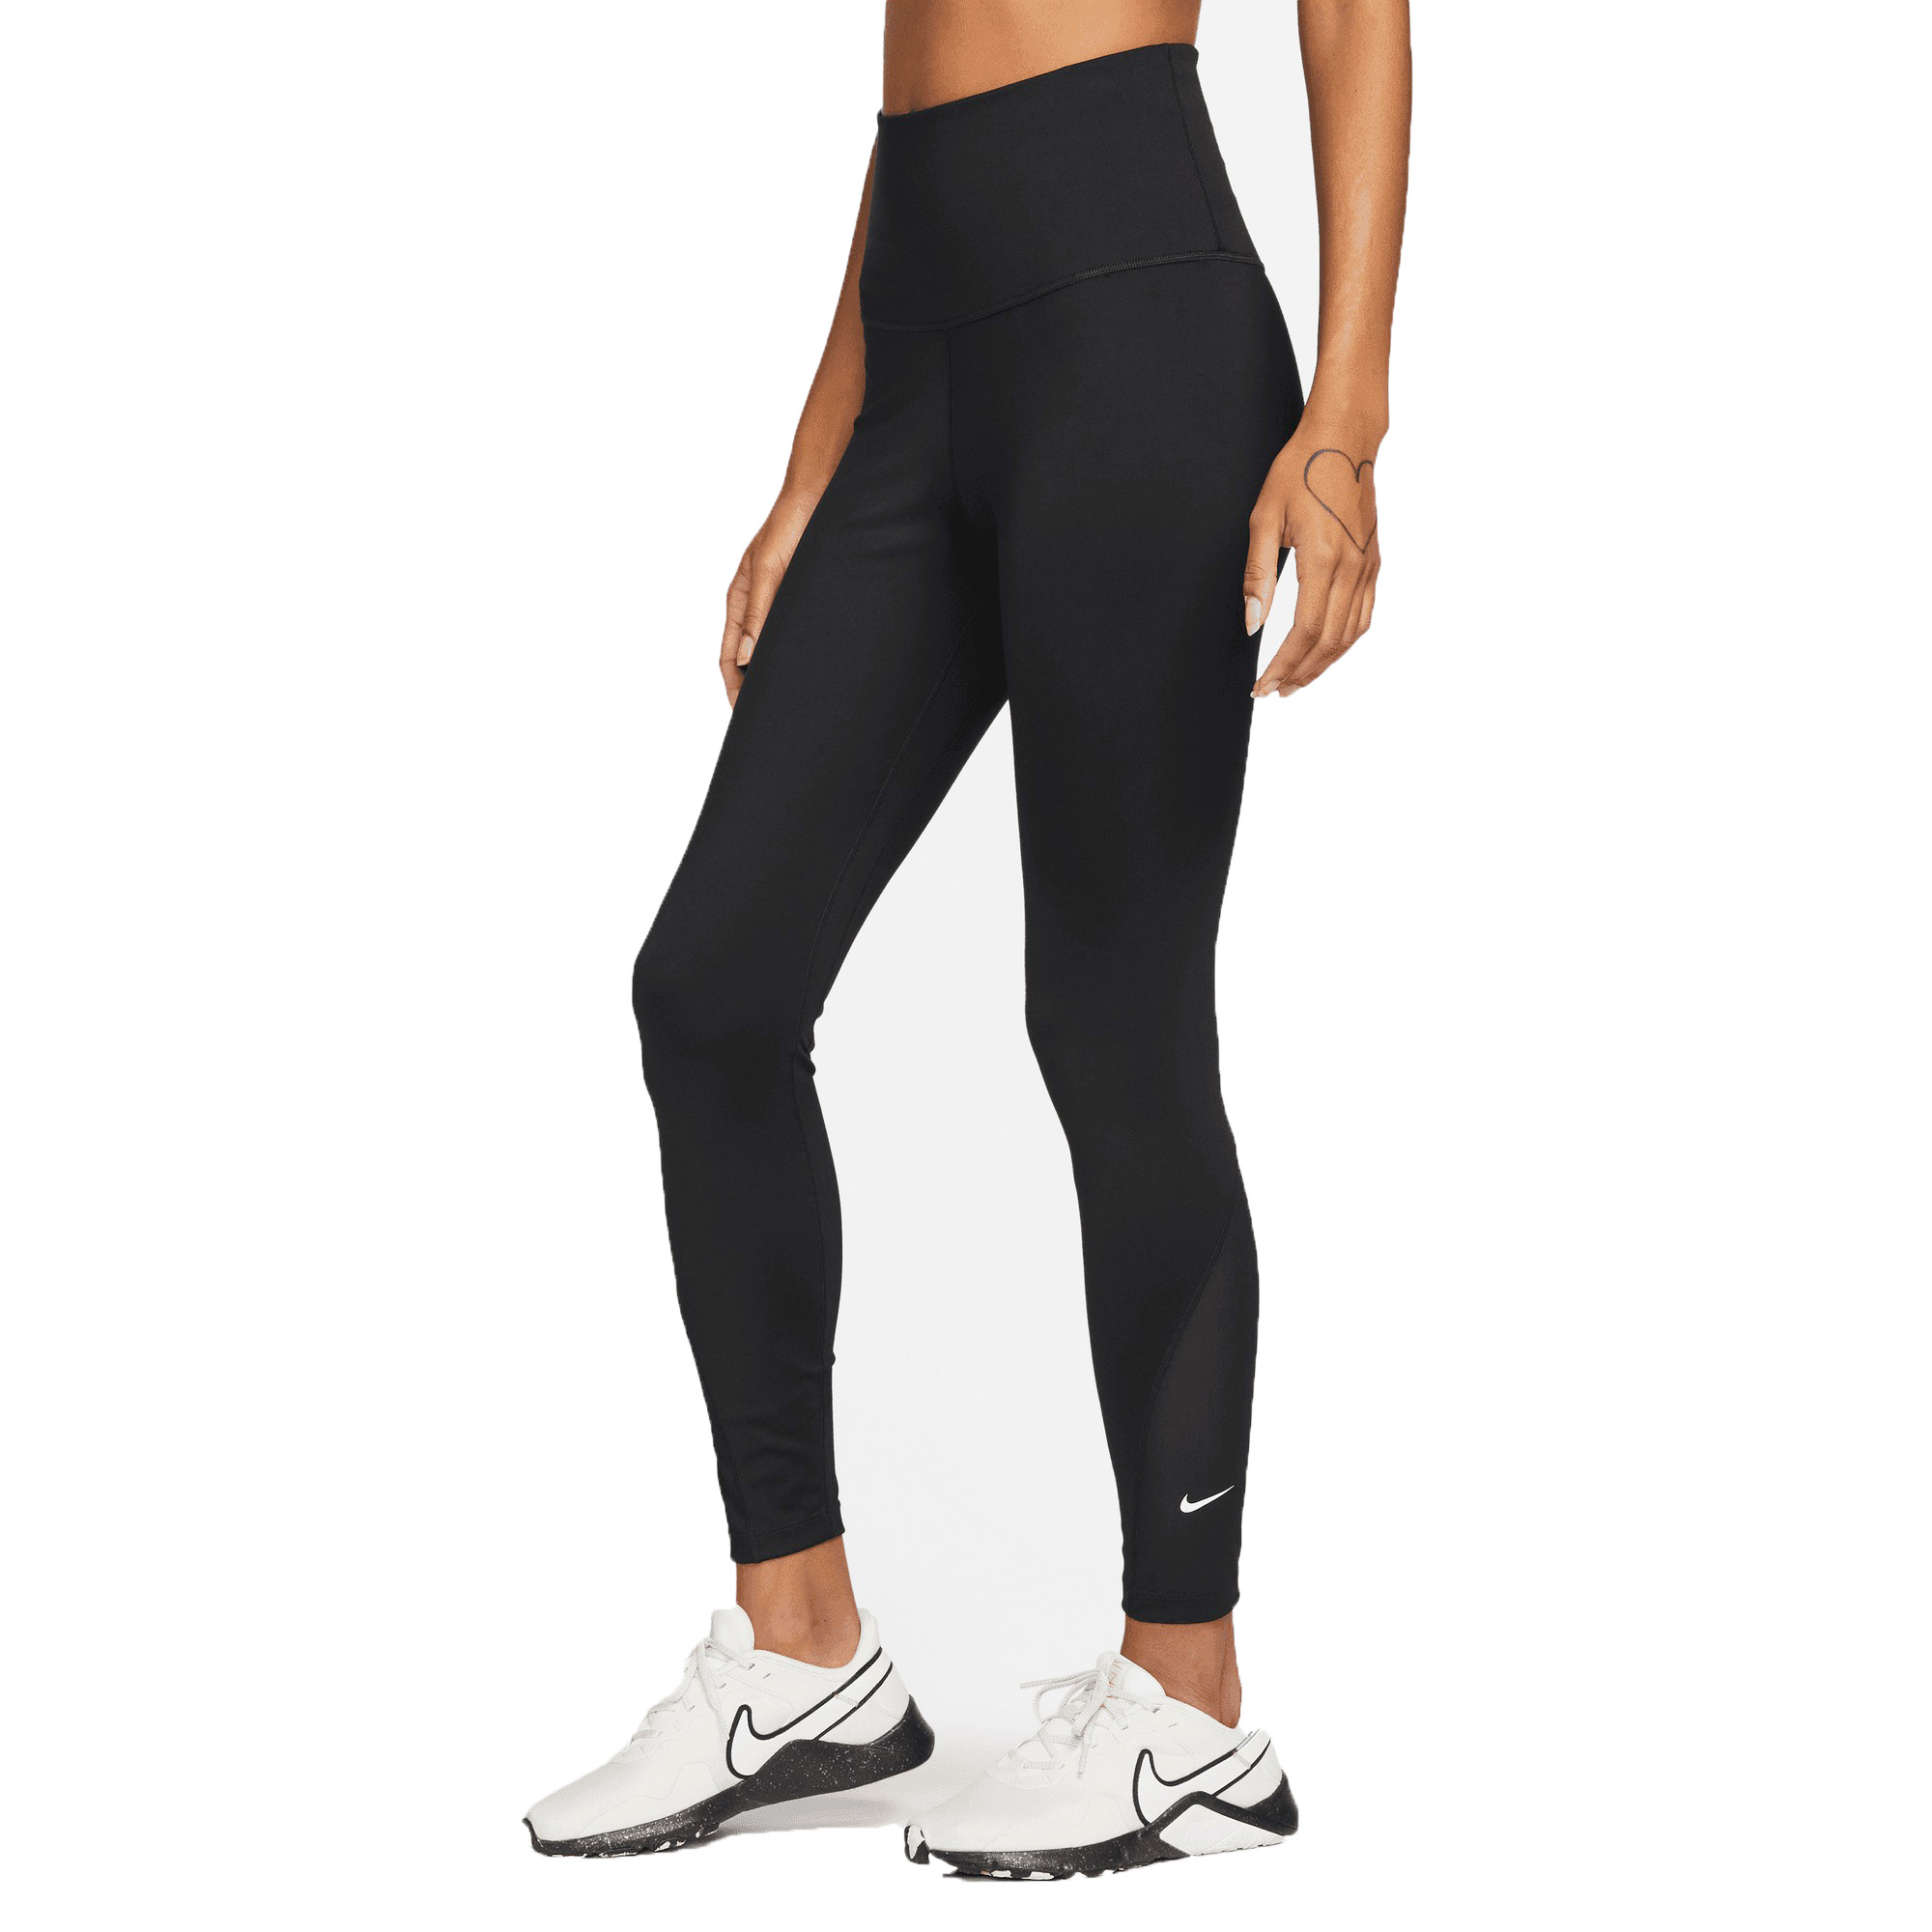 Nike Performance Damen Leggings in dunkelgrau bestellen - 18677601